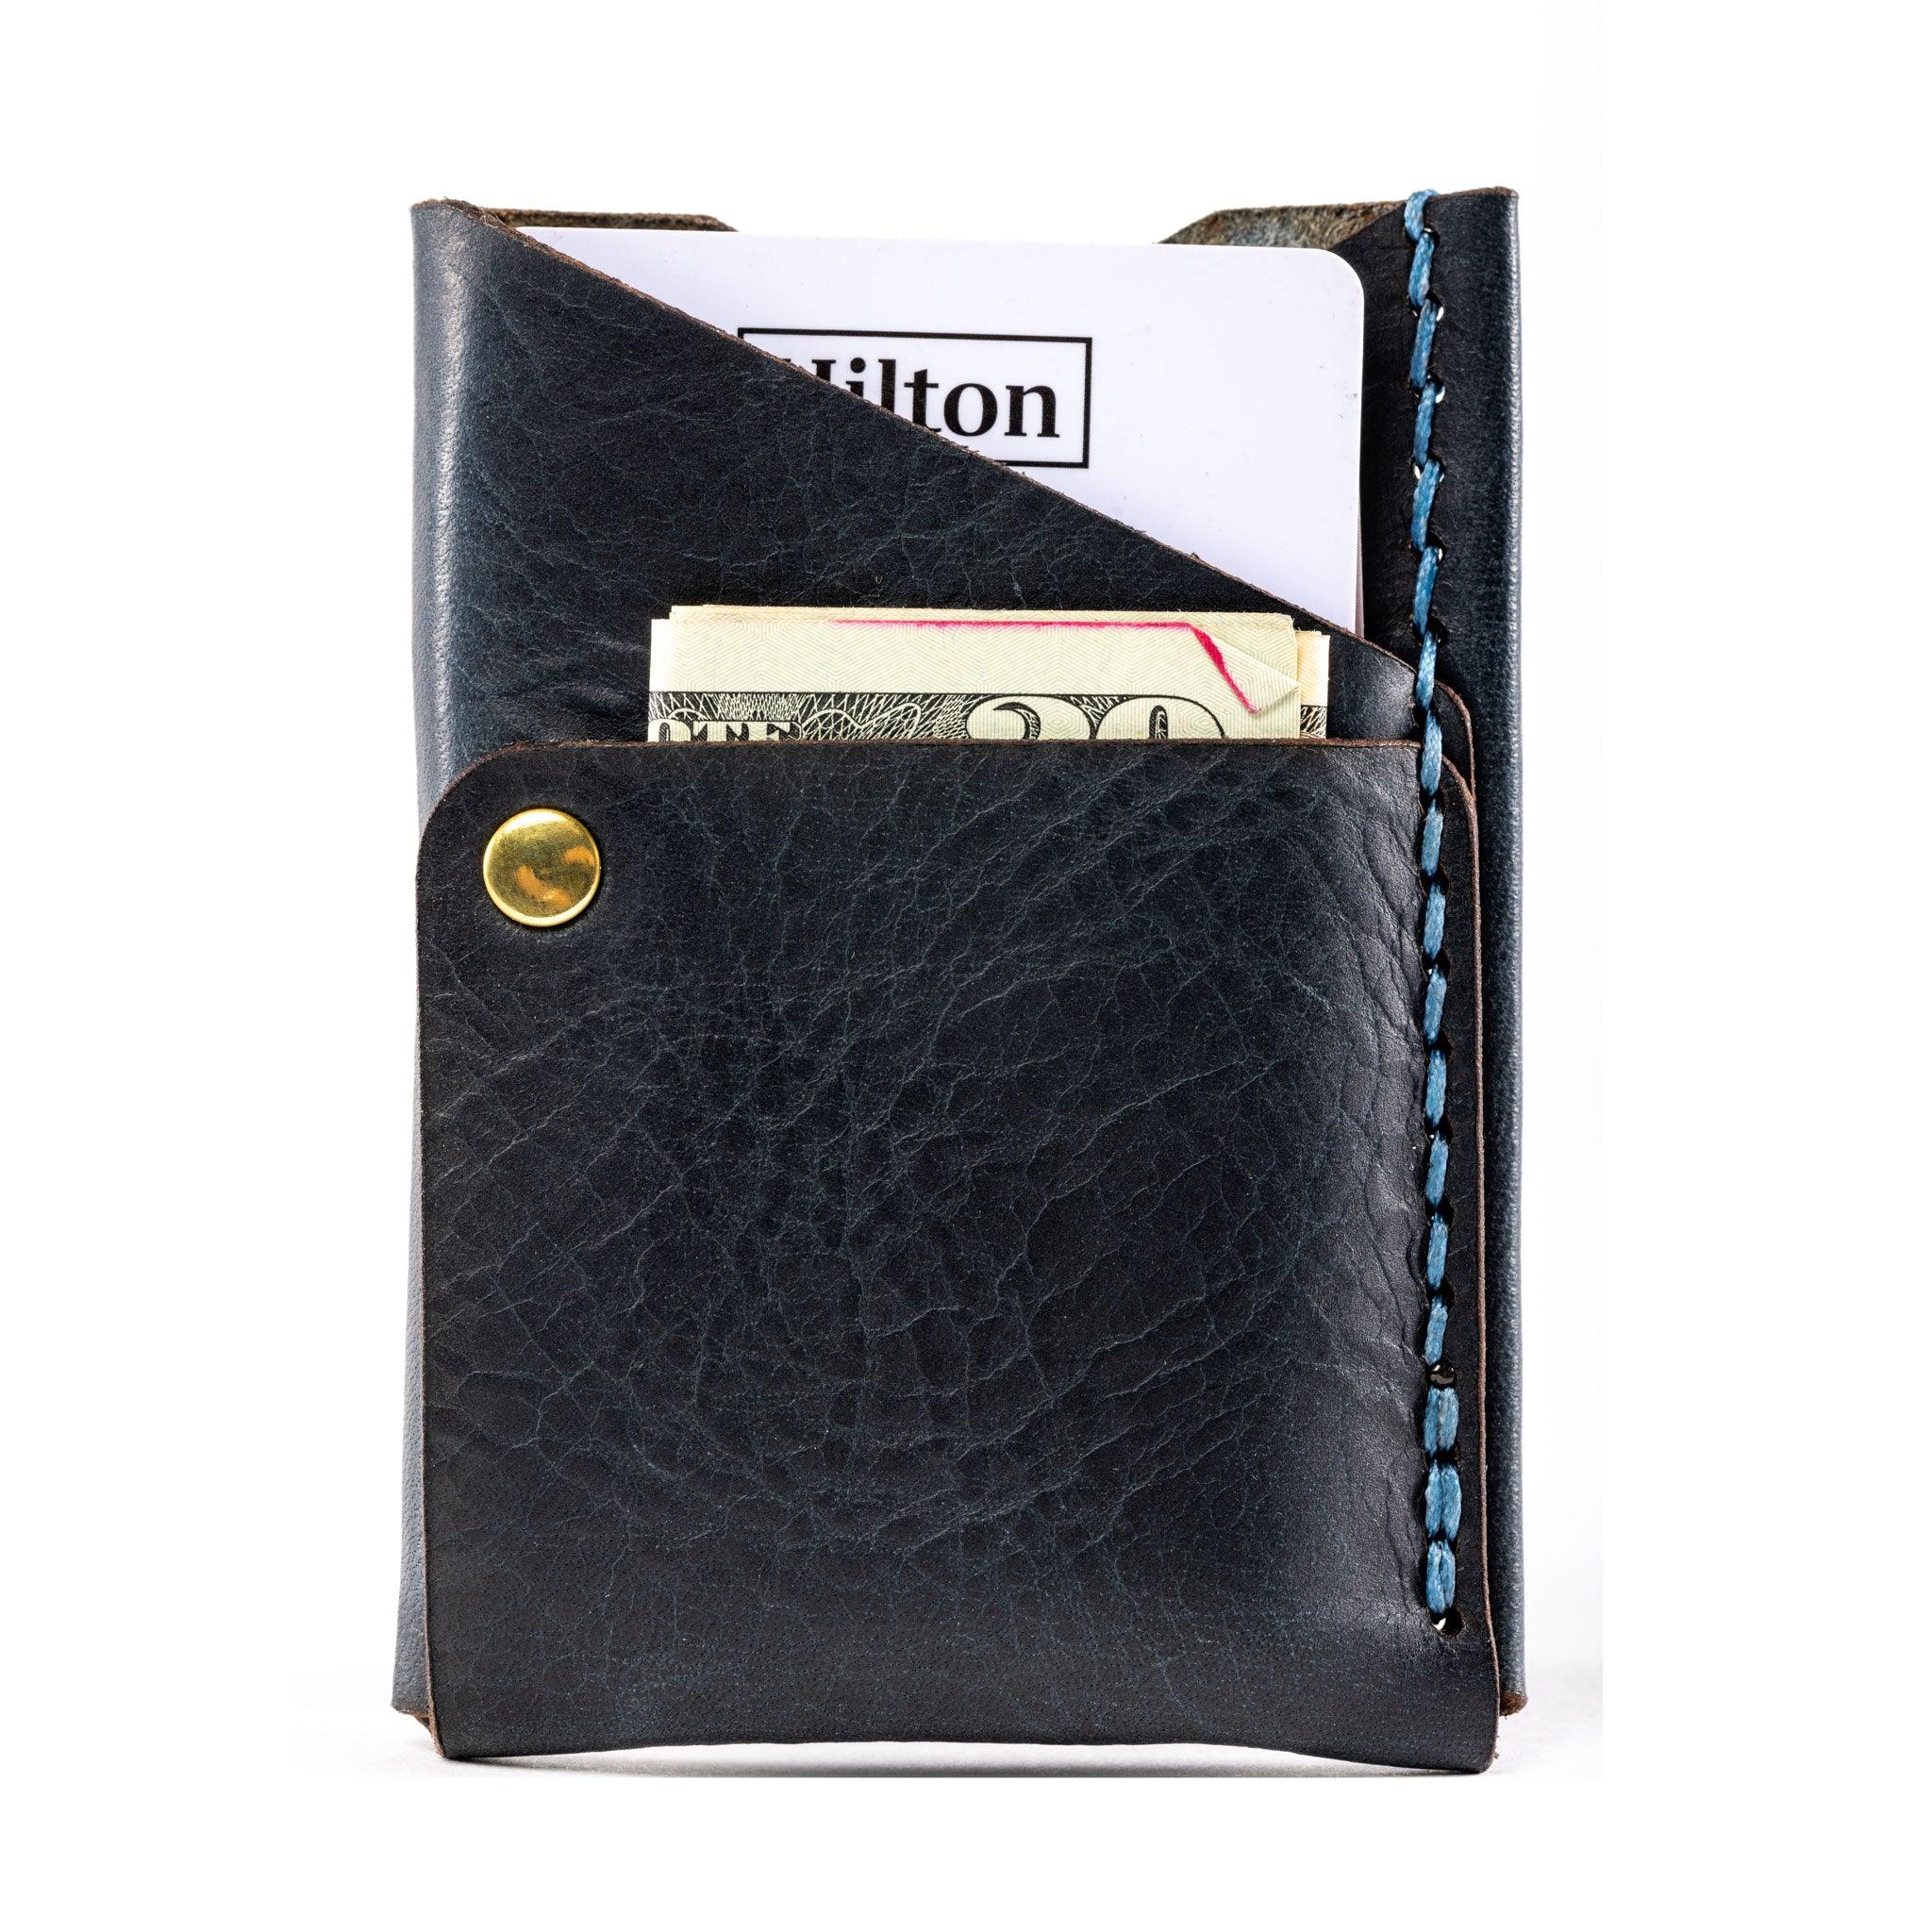 Big Spender Leather Wallet in Midnight - Espacio Handmade